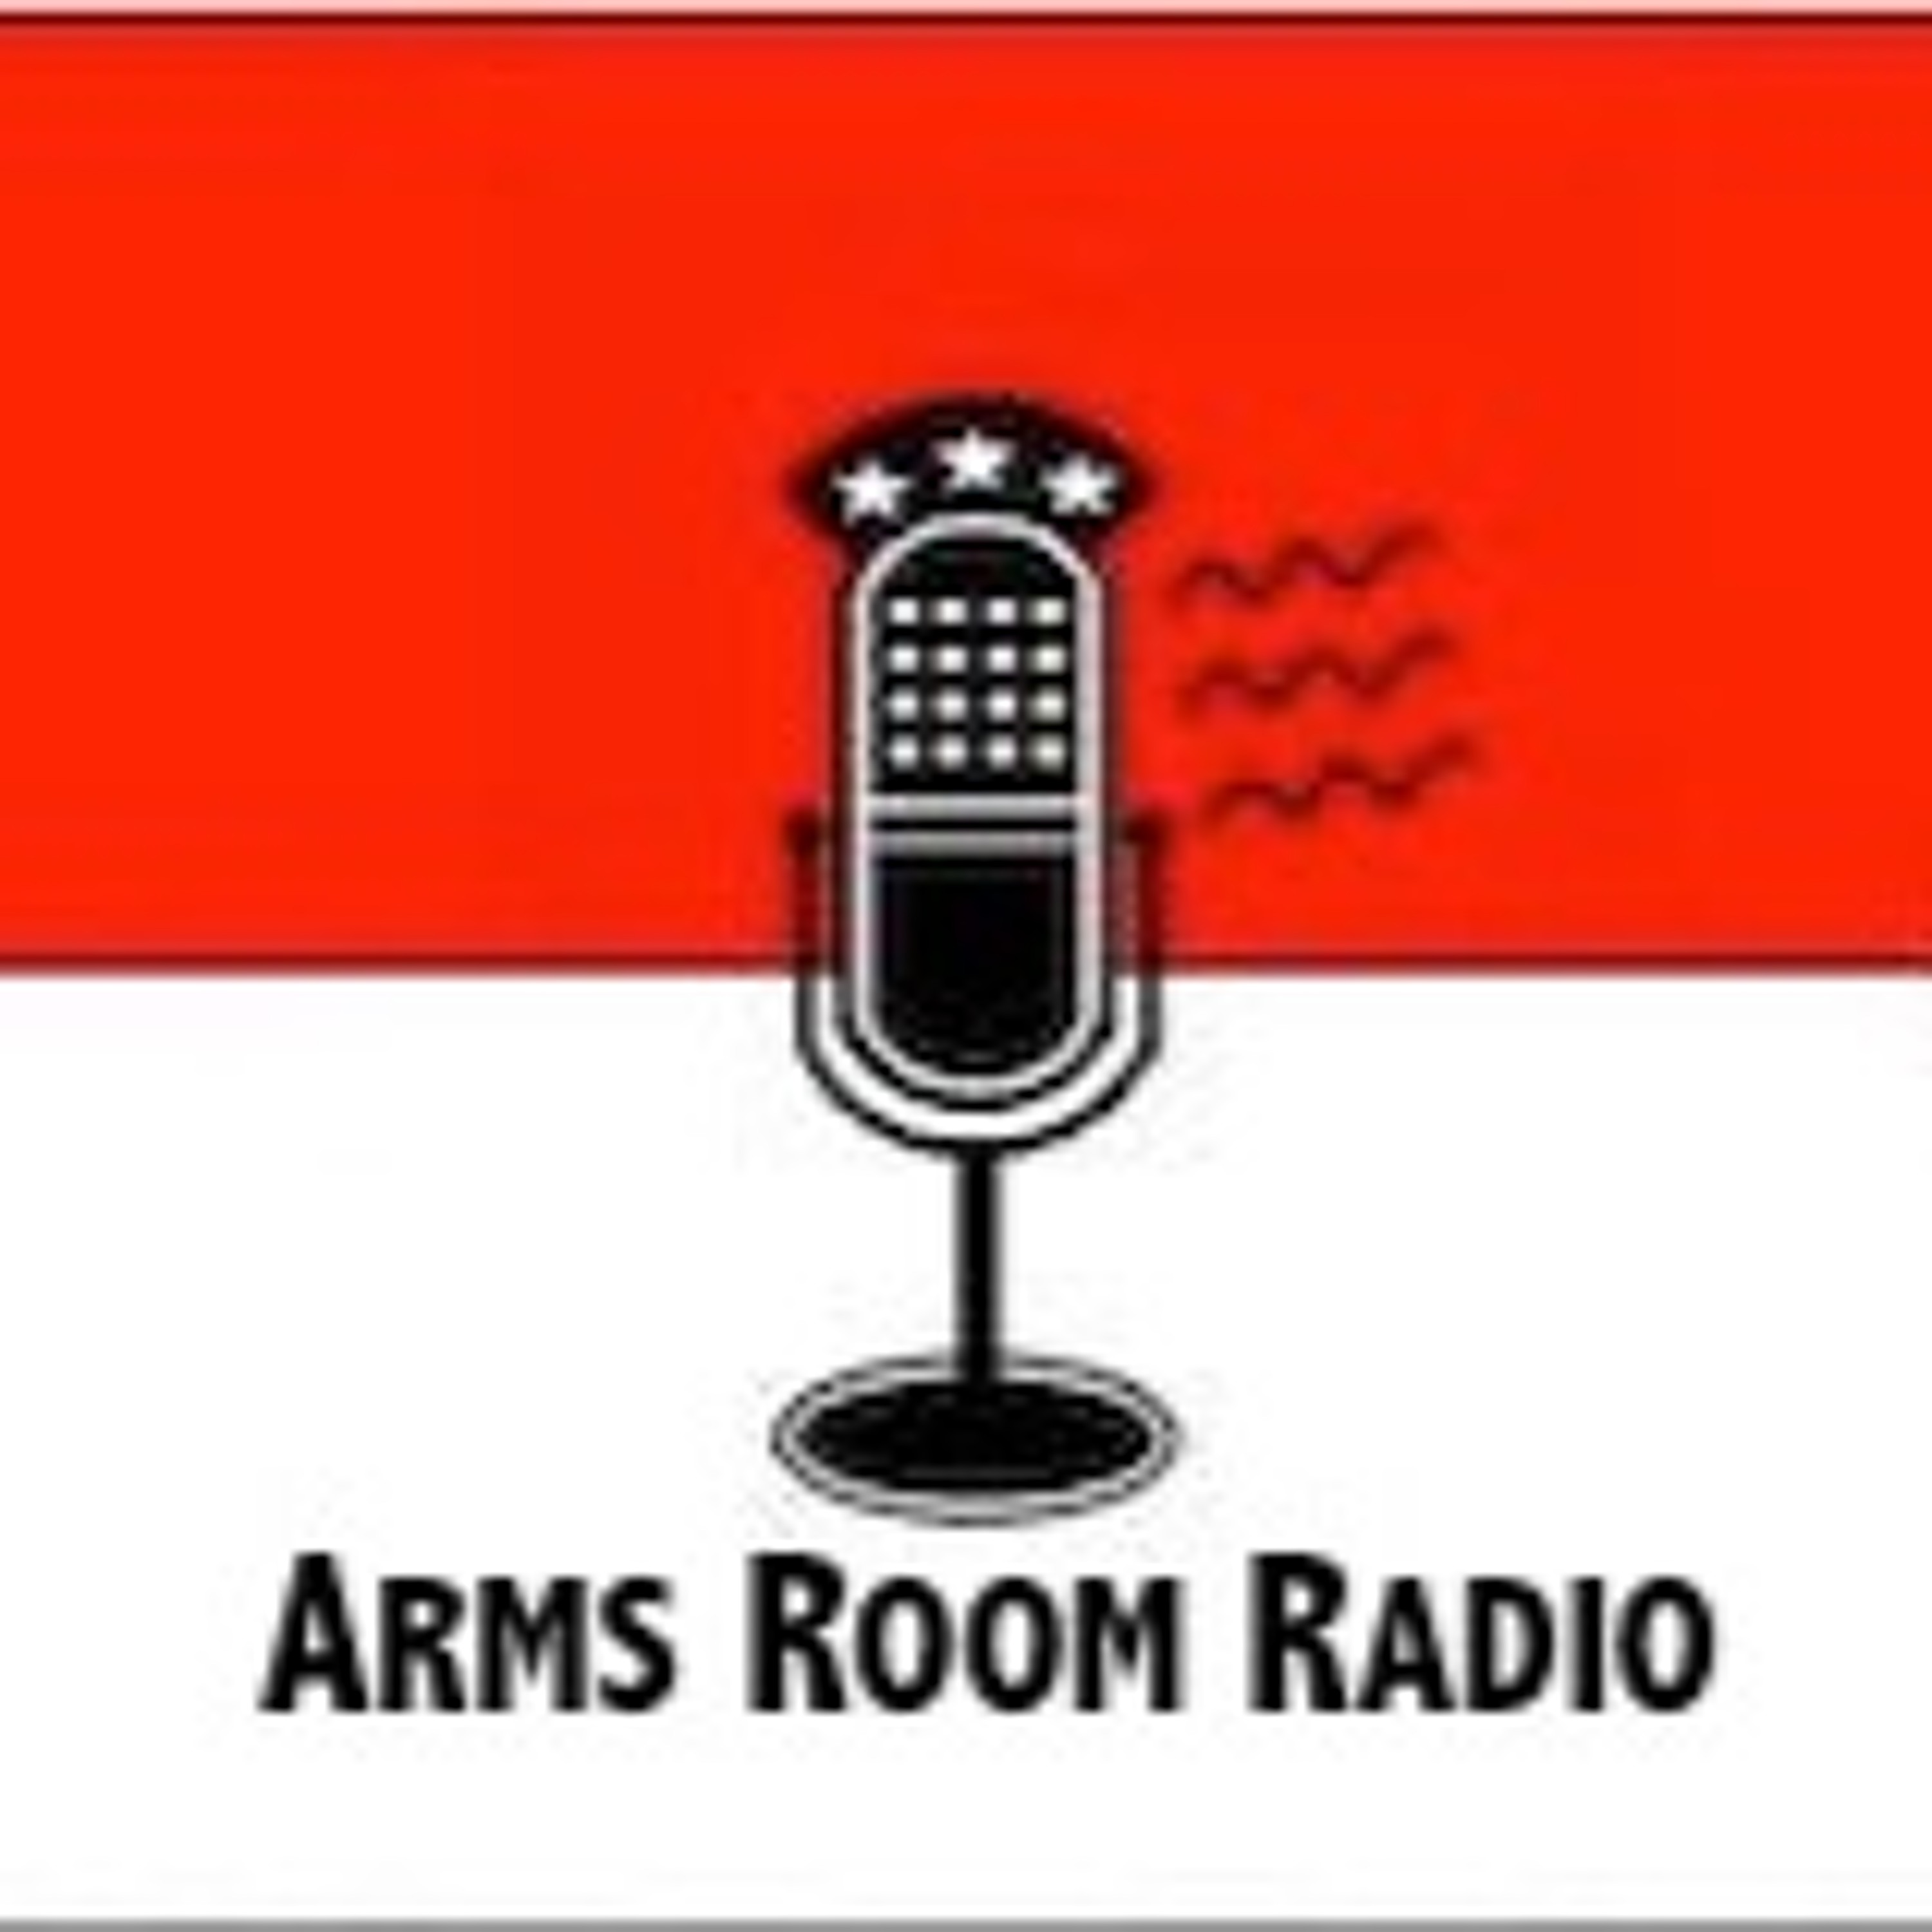 ArmsRoomRadio 10.17.20 Craig DeLuz, Lauren Hartnett, Dr. John Edeen